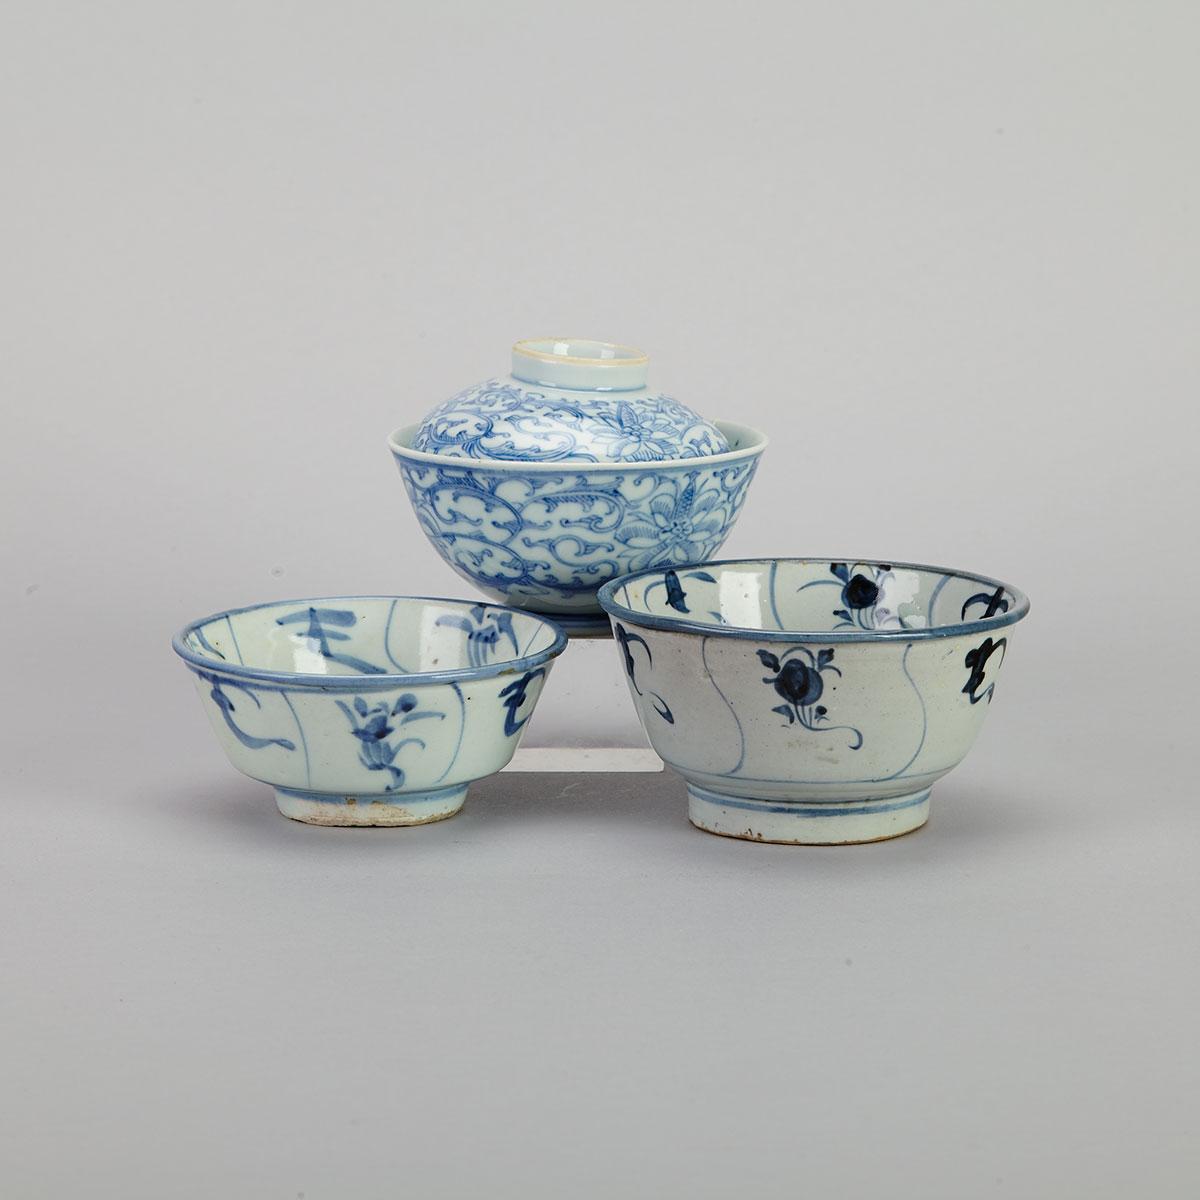 Three Blue and White Bowls, 19th Century